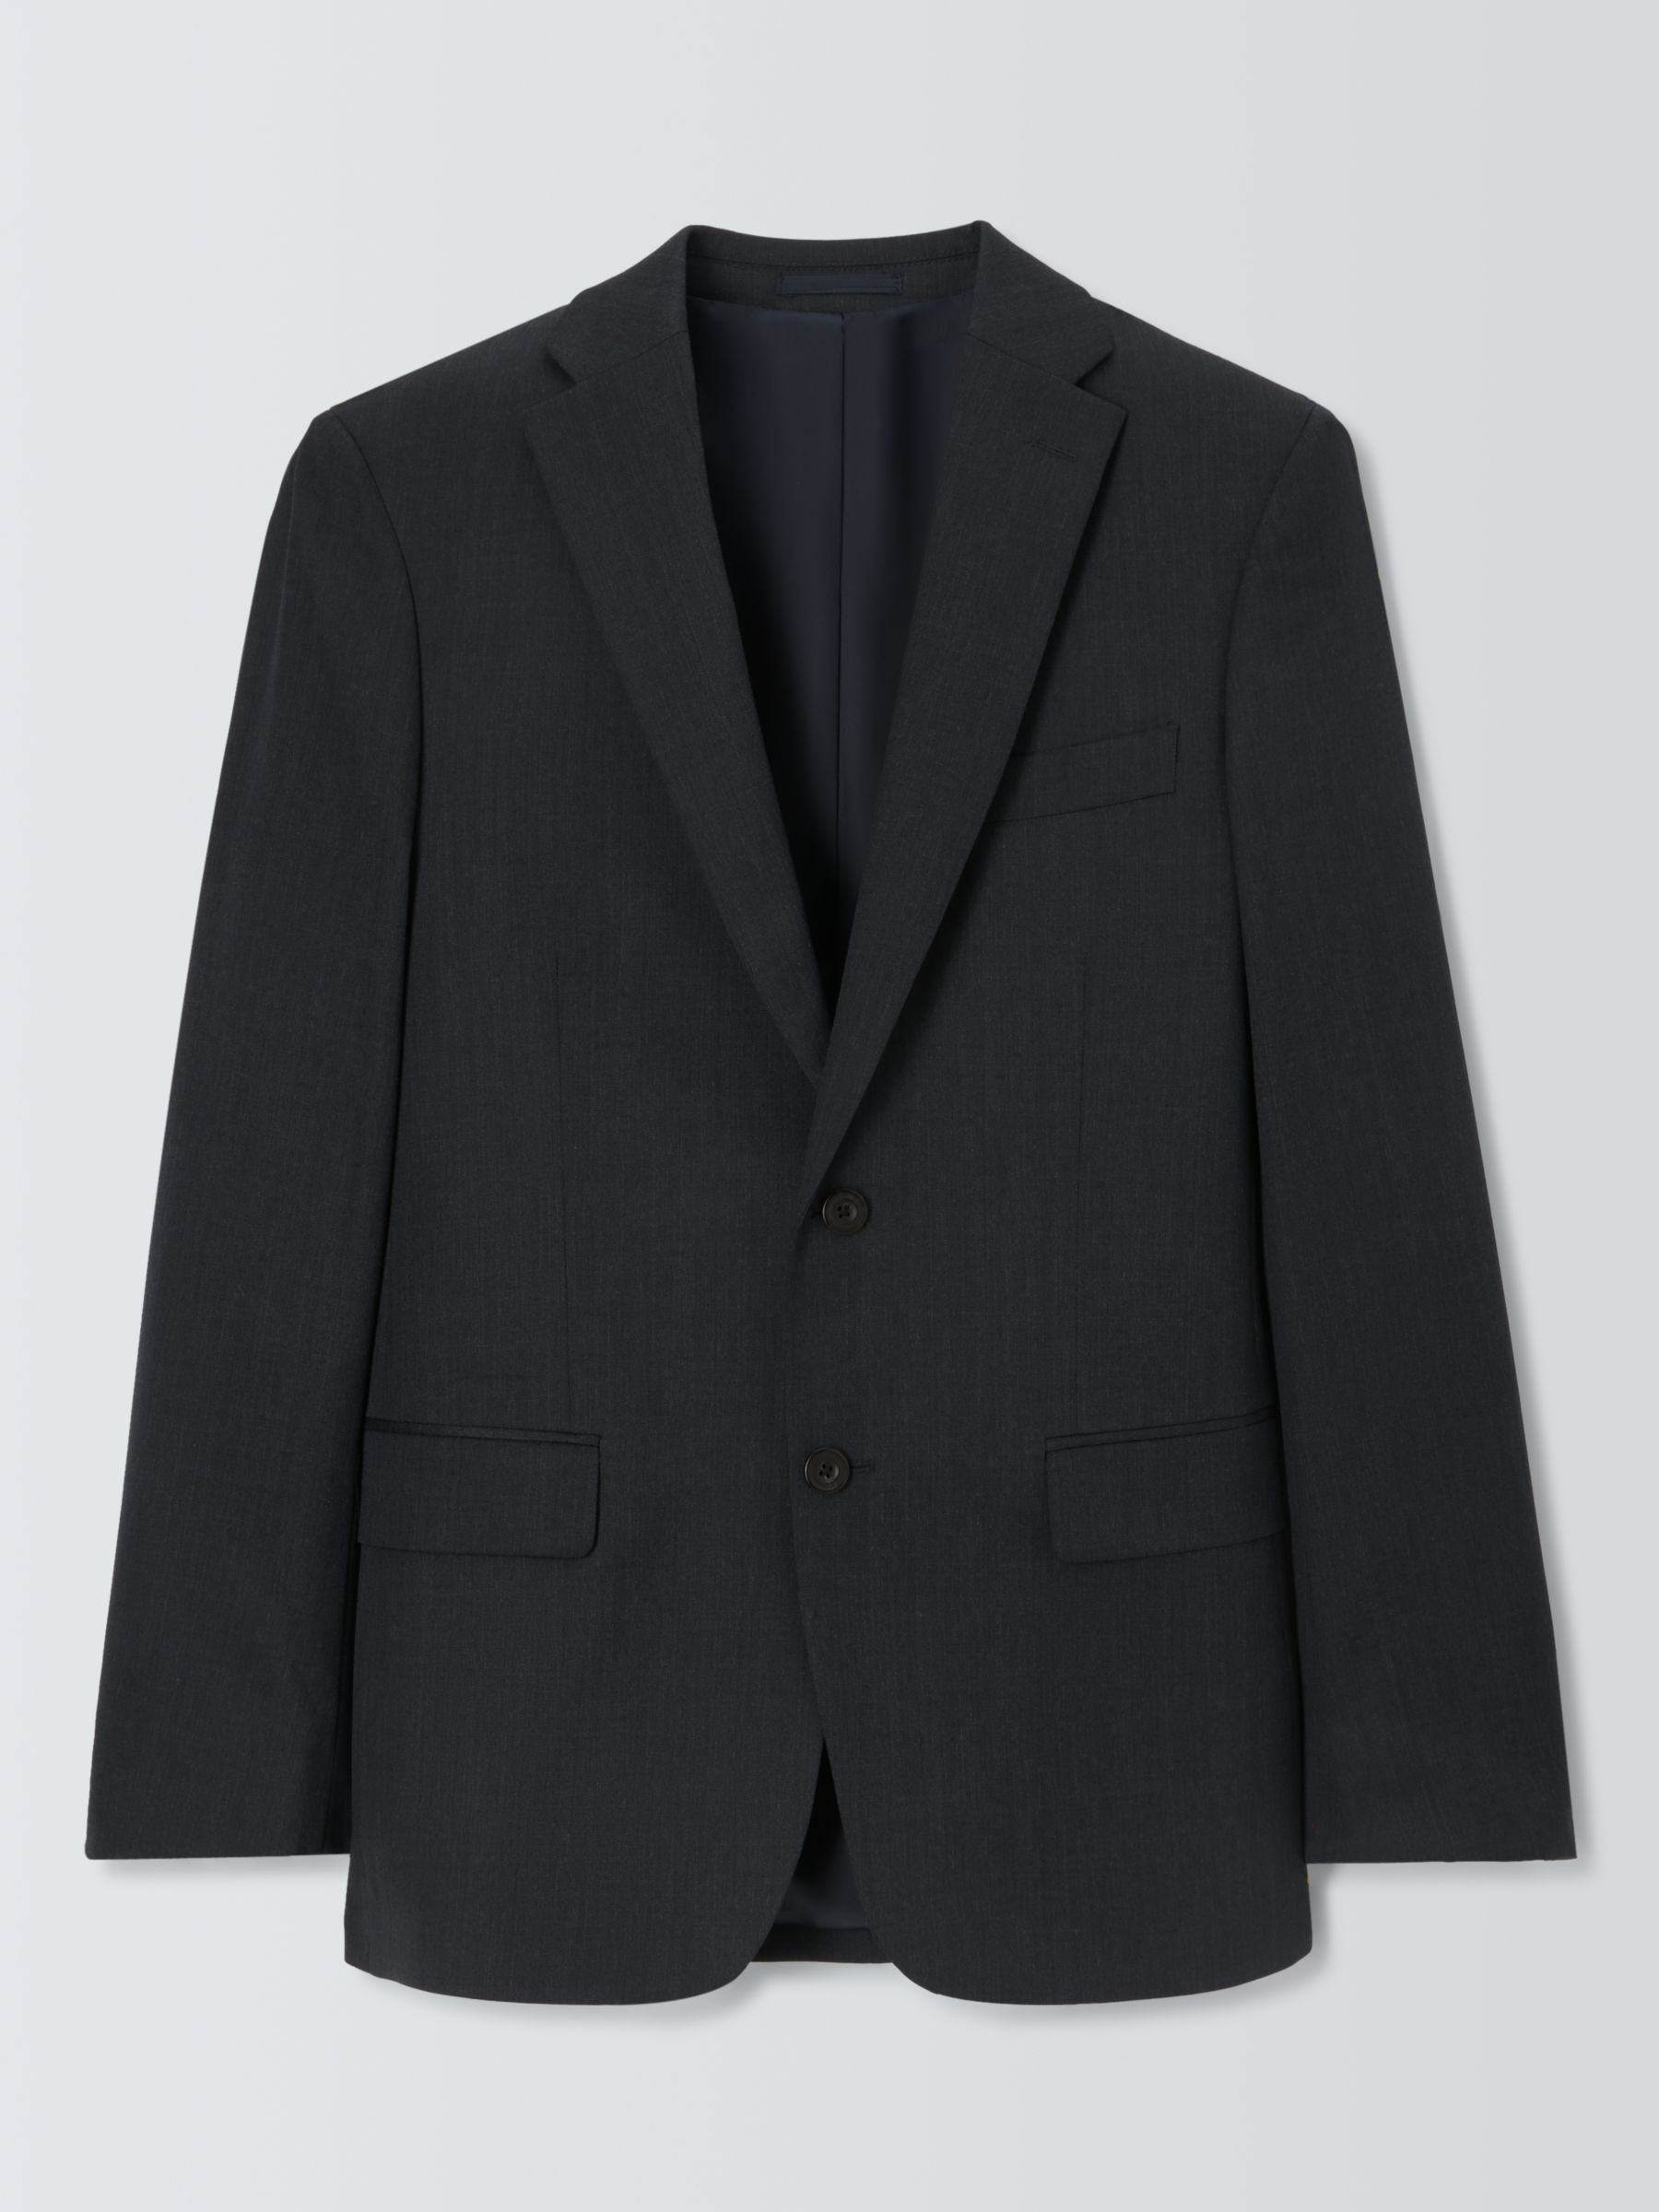 John Lewis Washable Wool Blend Regular Fit Suit Jacket, Charcoal, 36R